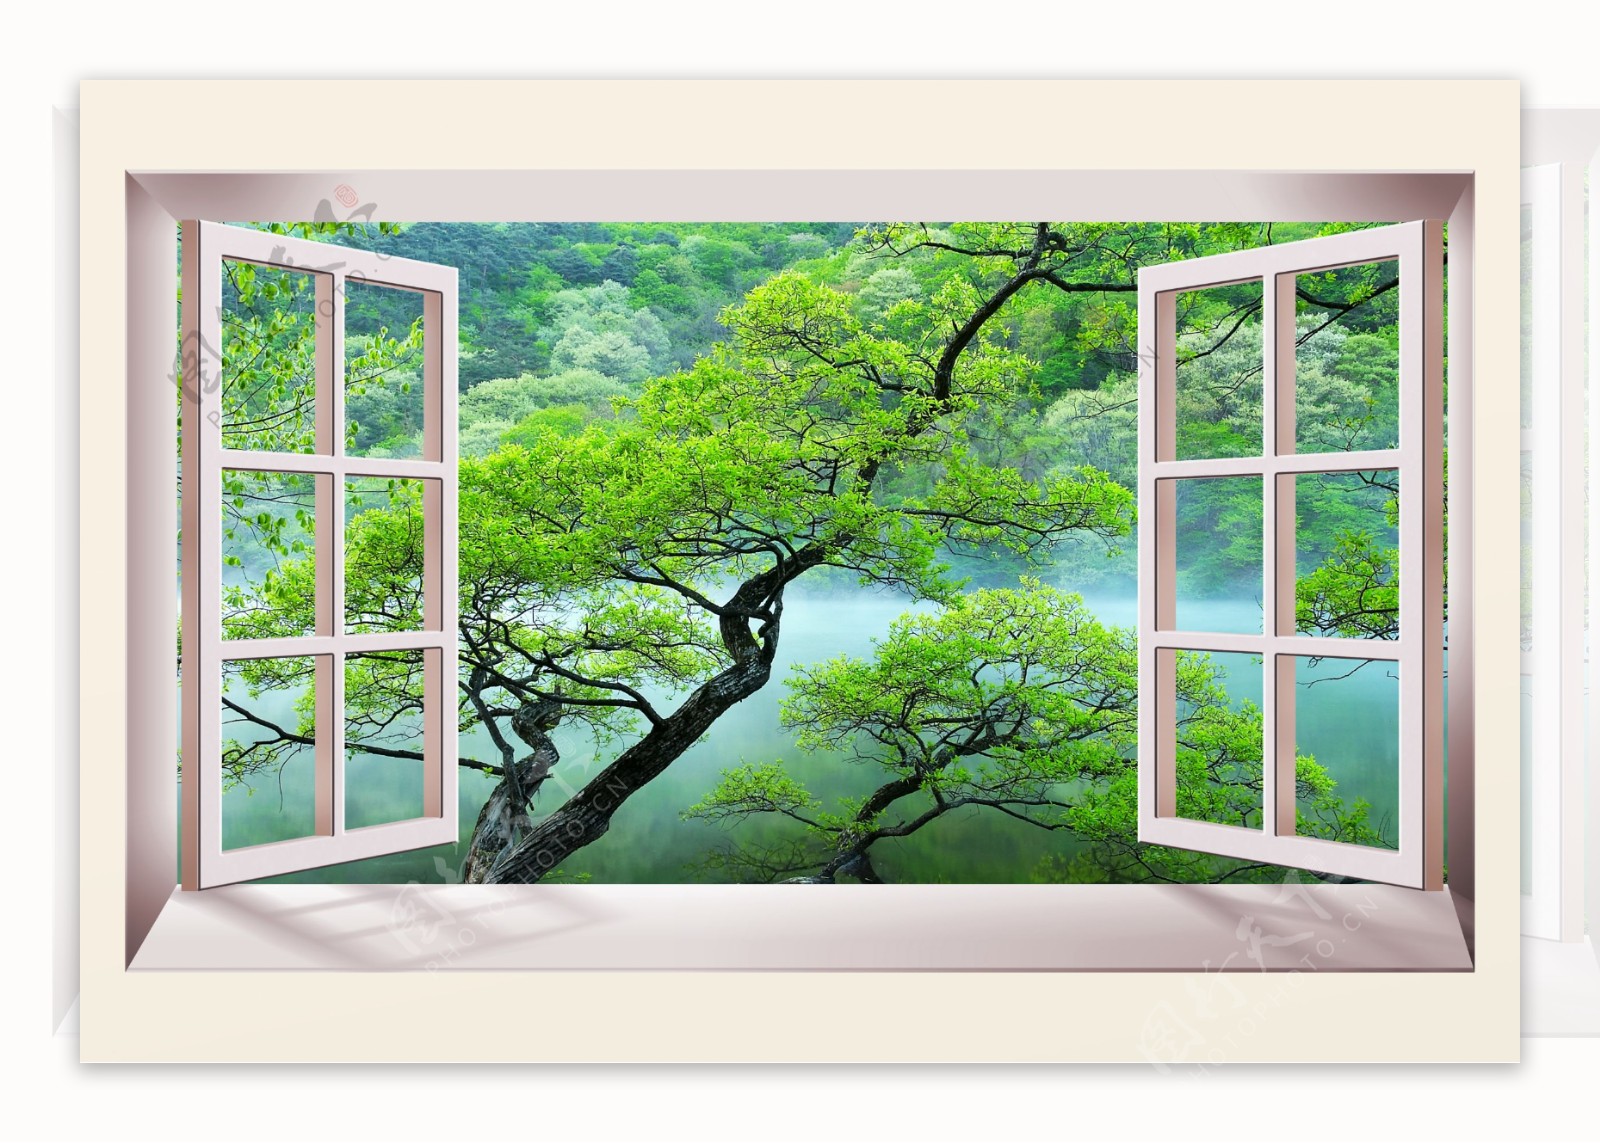 3D立体橱窗绿树背景墙